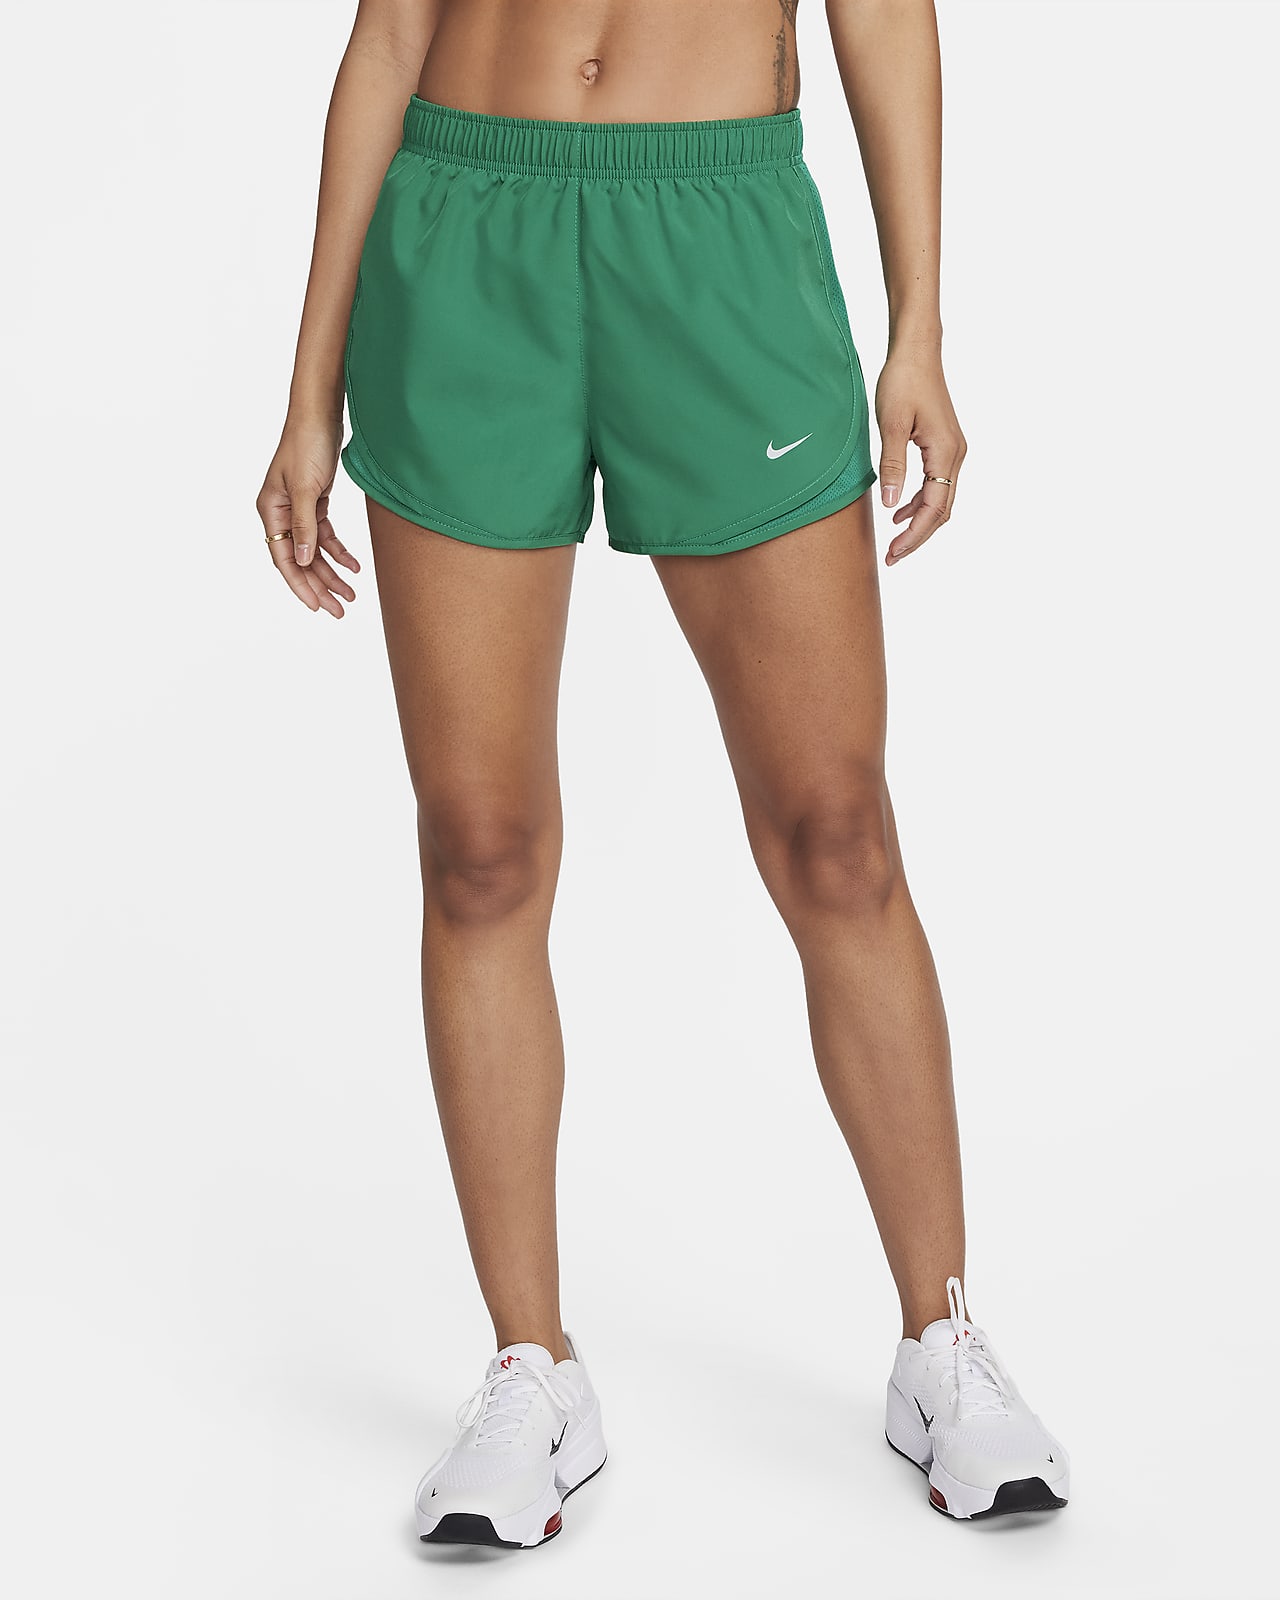 Women's Gym Shorts. Training & Workout Shorts. Nike IL